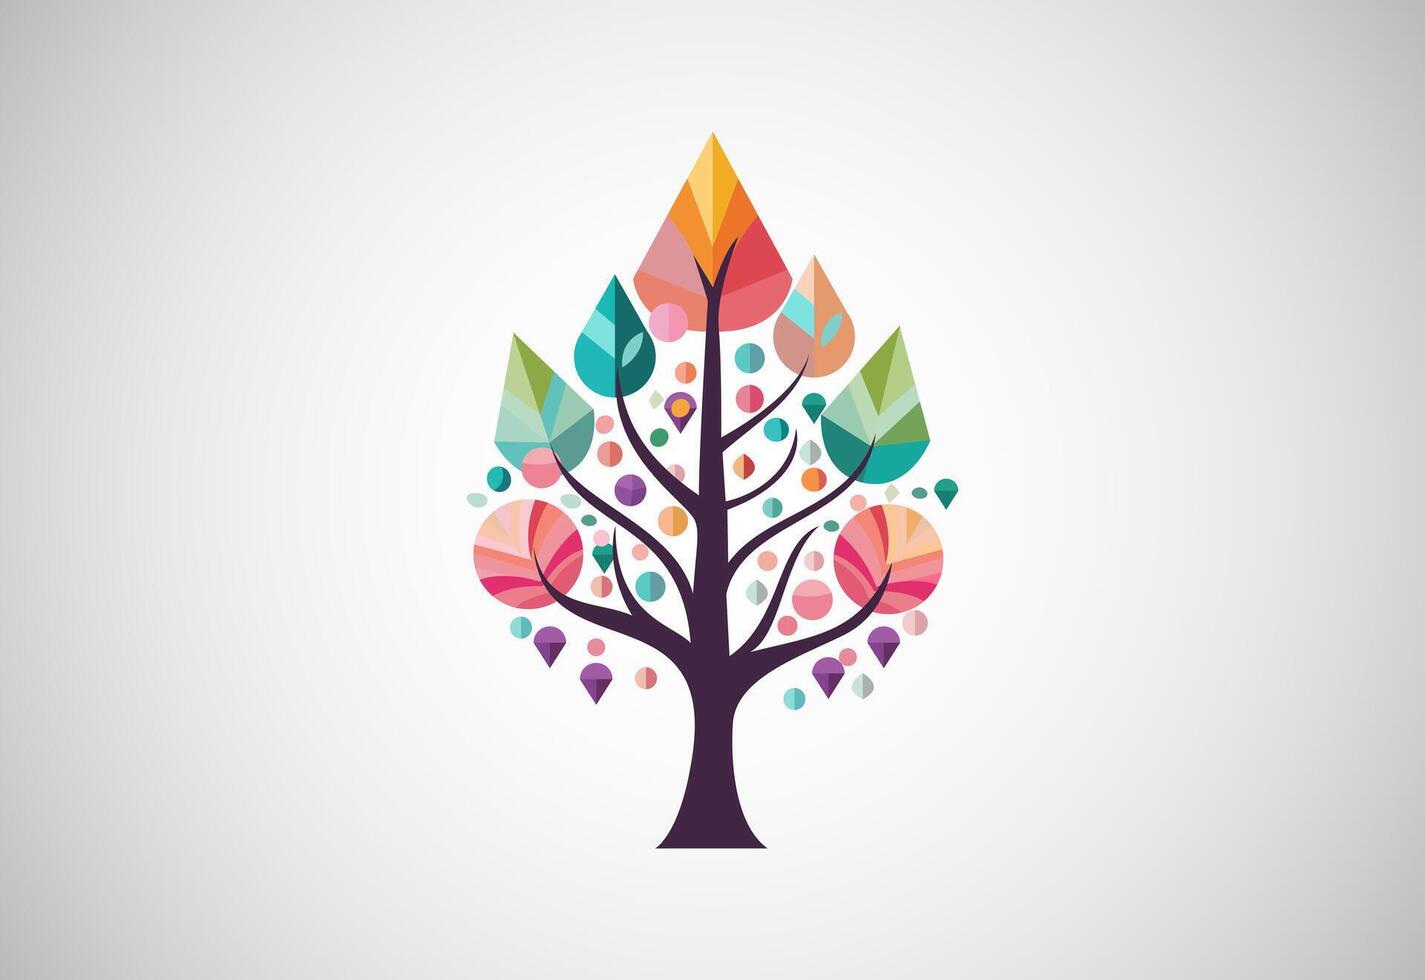 Nature tree logo design vector illustration. Tree of life logo concept